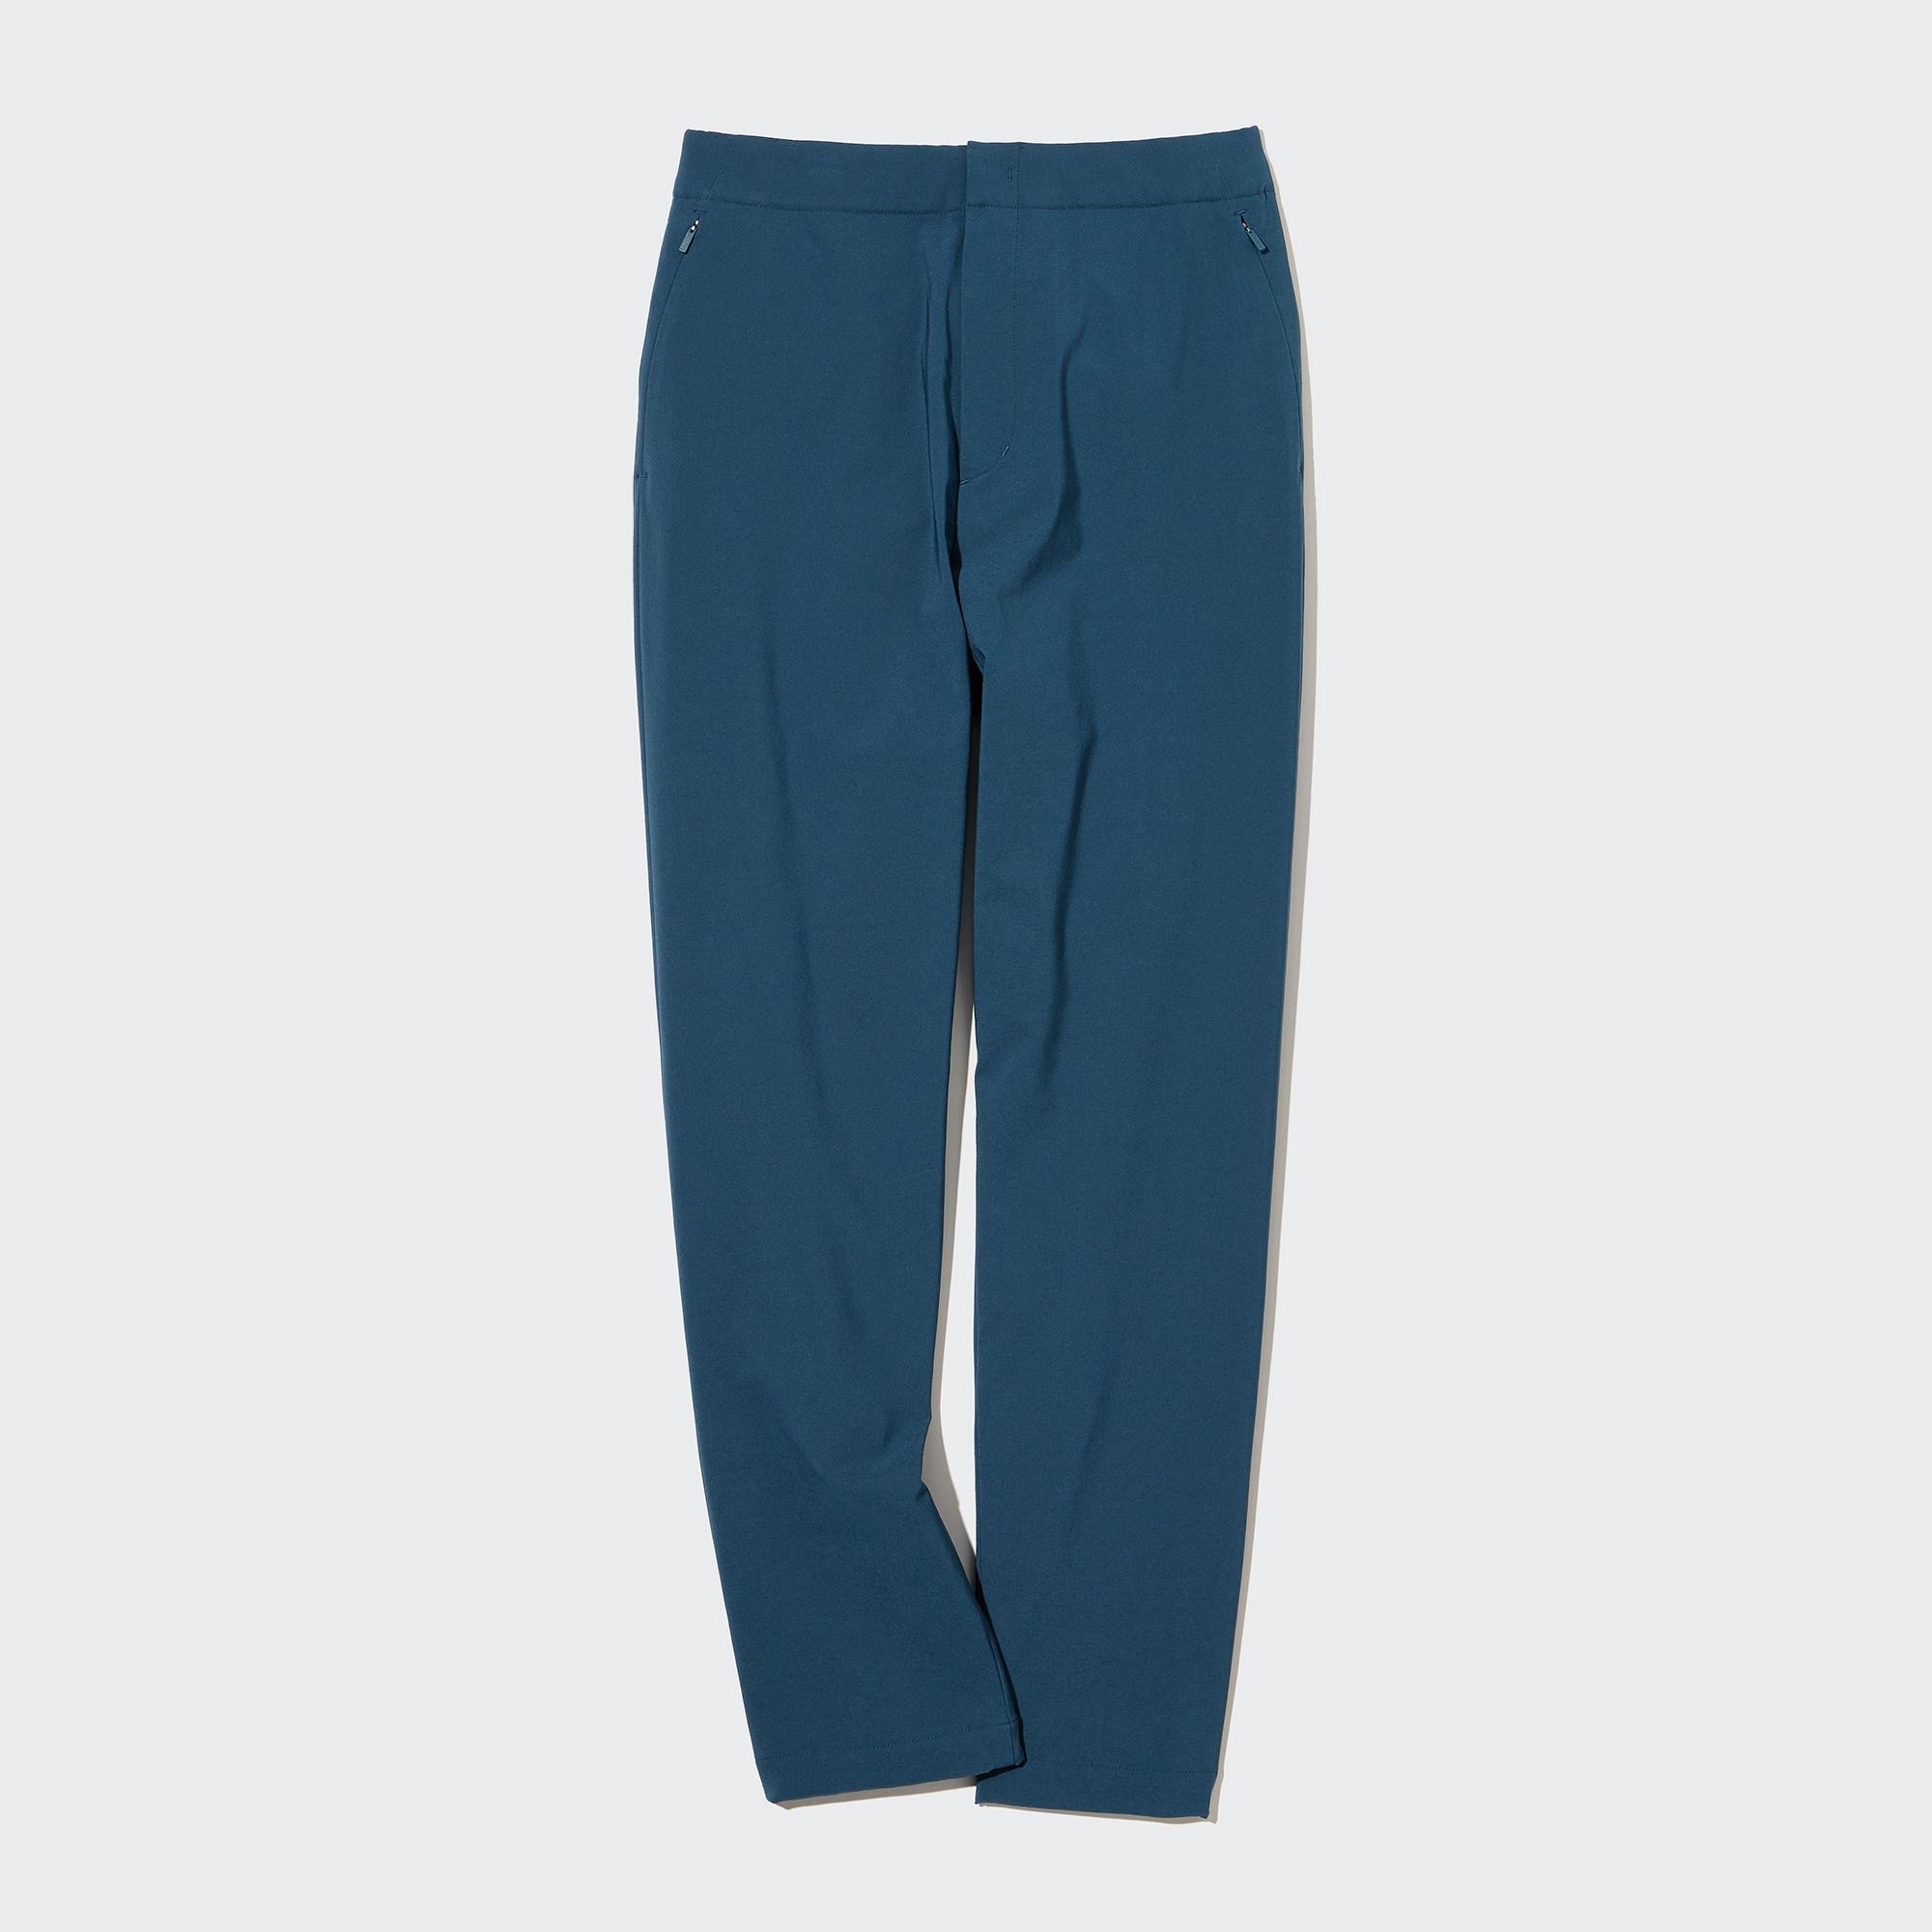 Uniqlo Dress Pants Womens 30x30.5 Navy Blue Pinstripe Heat Tech